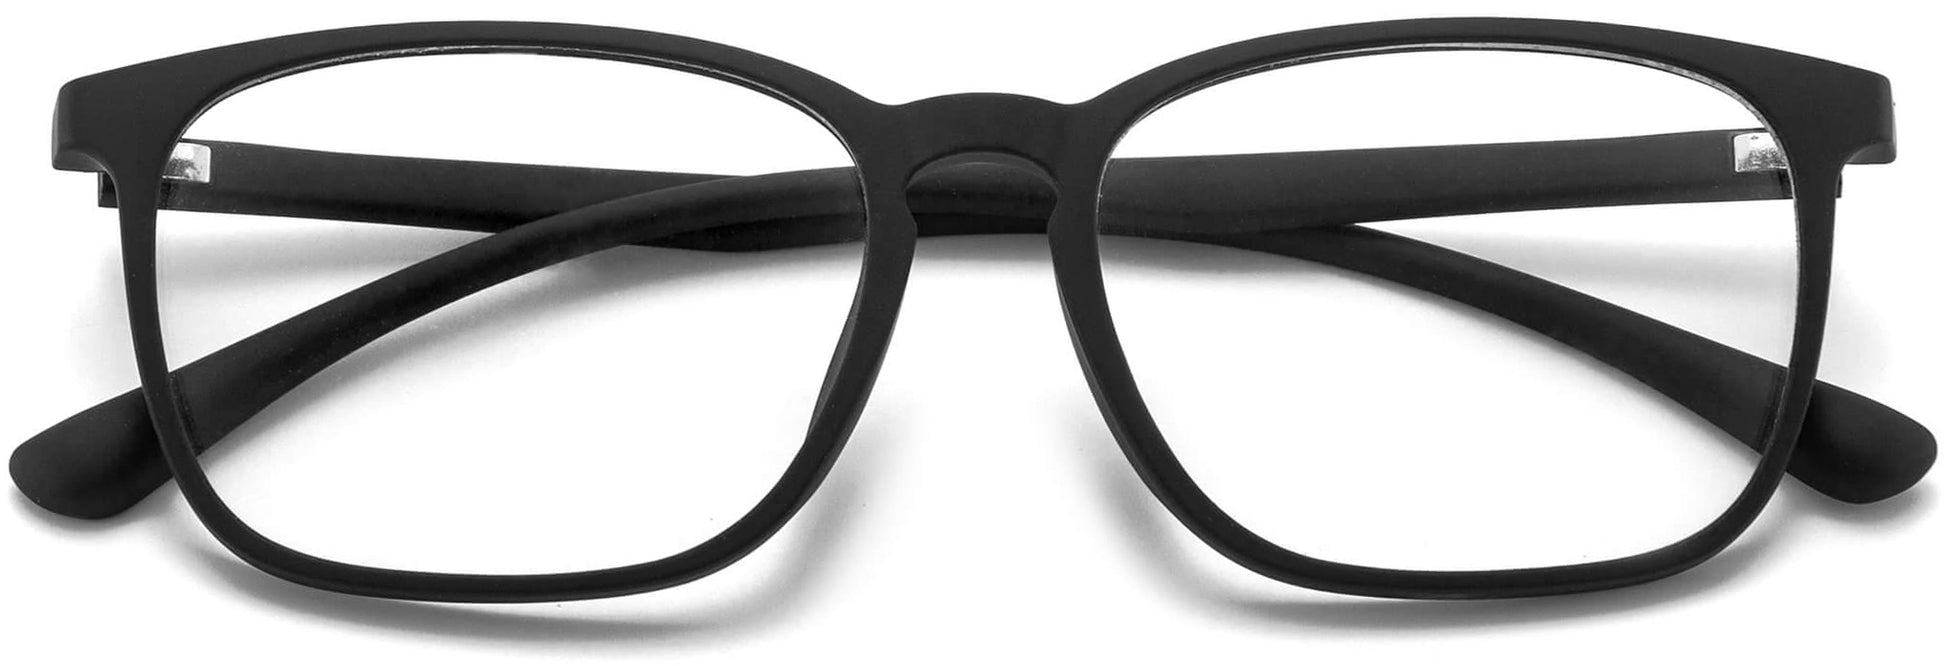 Adria Black TR90 Eyeglasses from ANRRI, Closed View